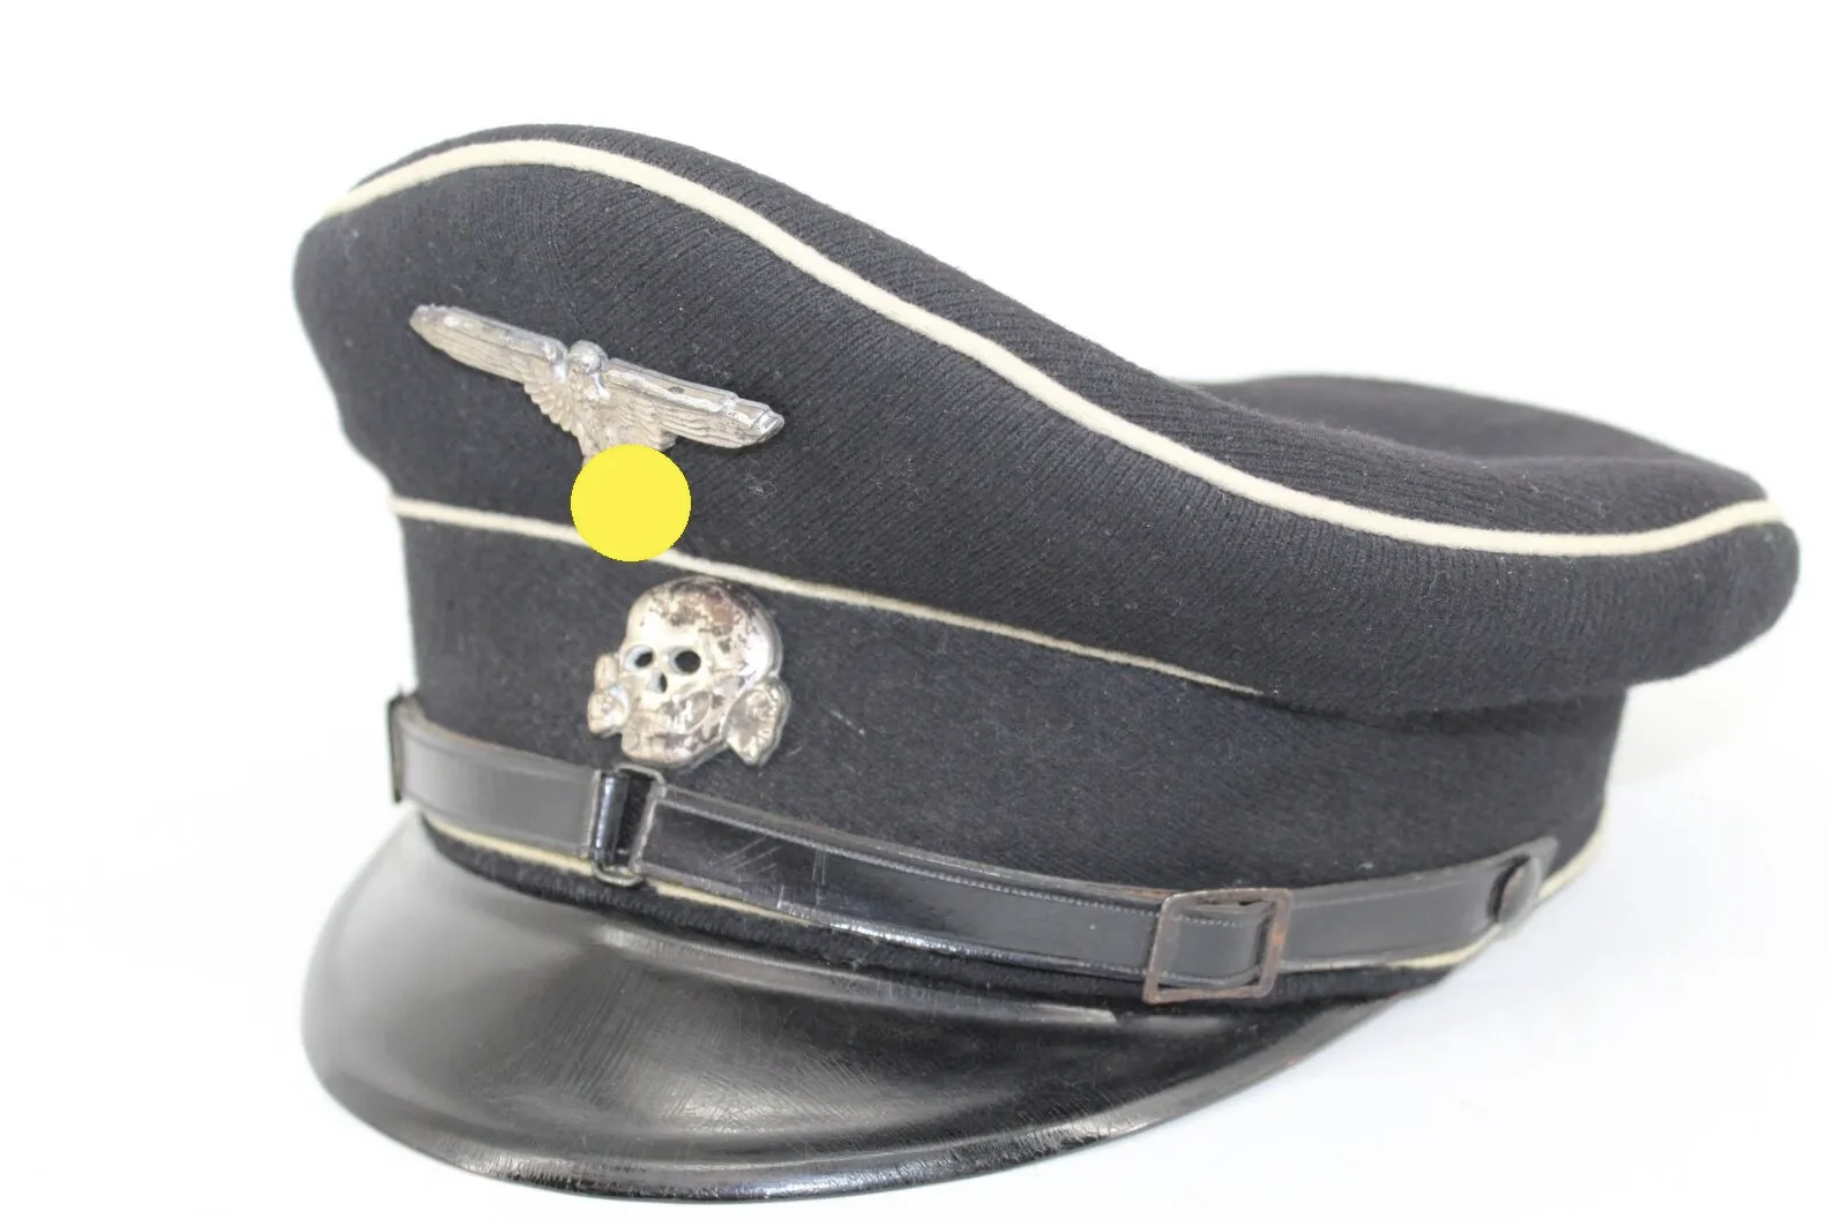 Allgemeine SS Black Peaked Cap for Sale